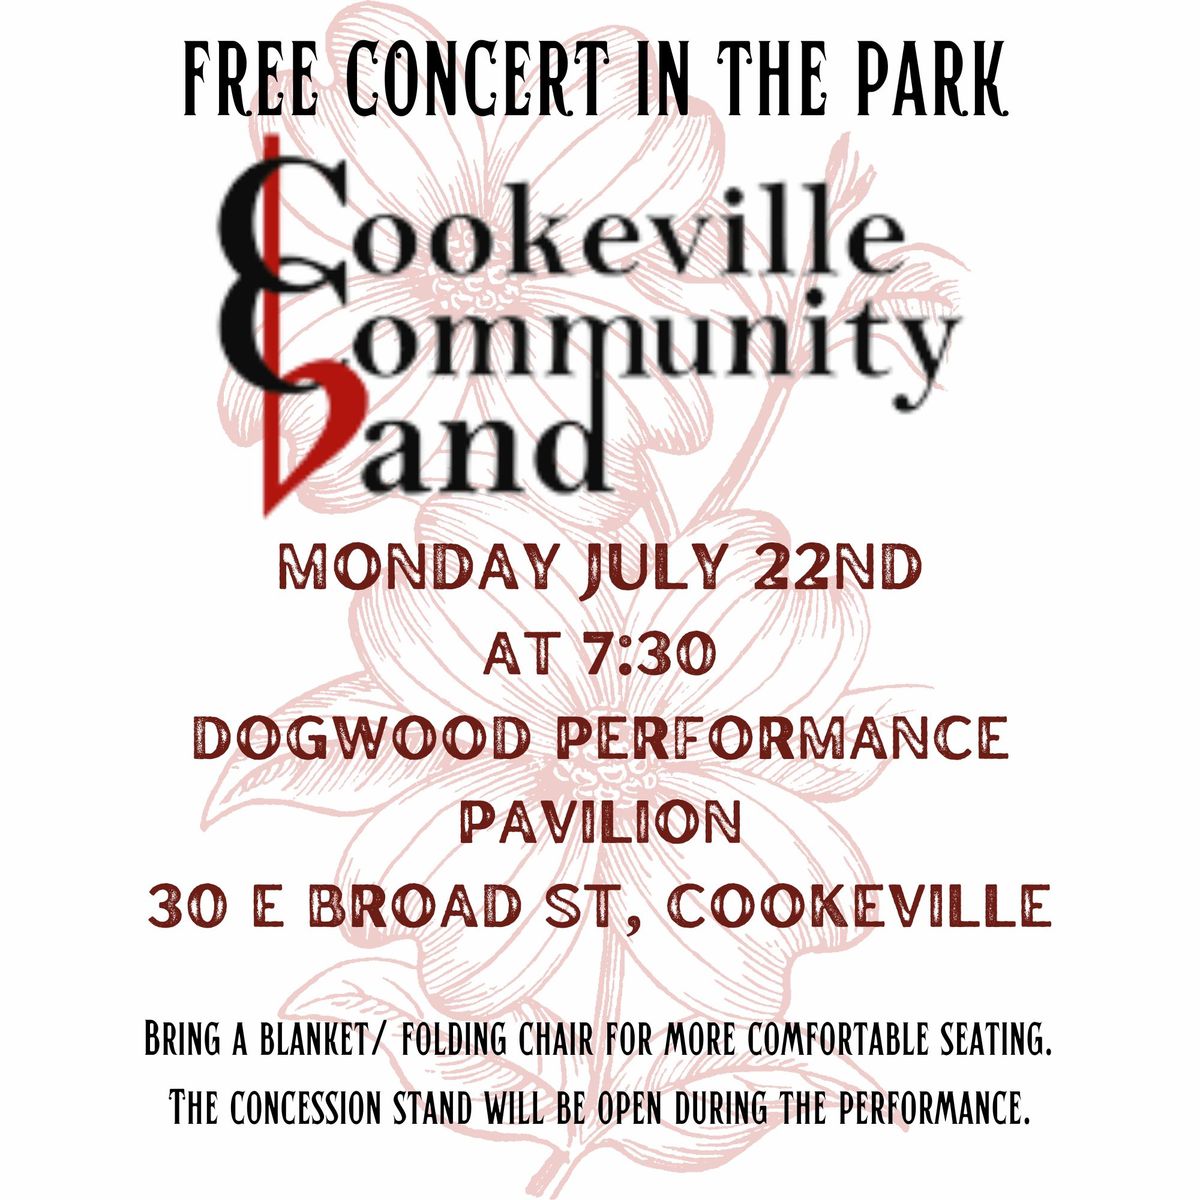 Cookeville Community Band Concert